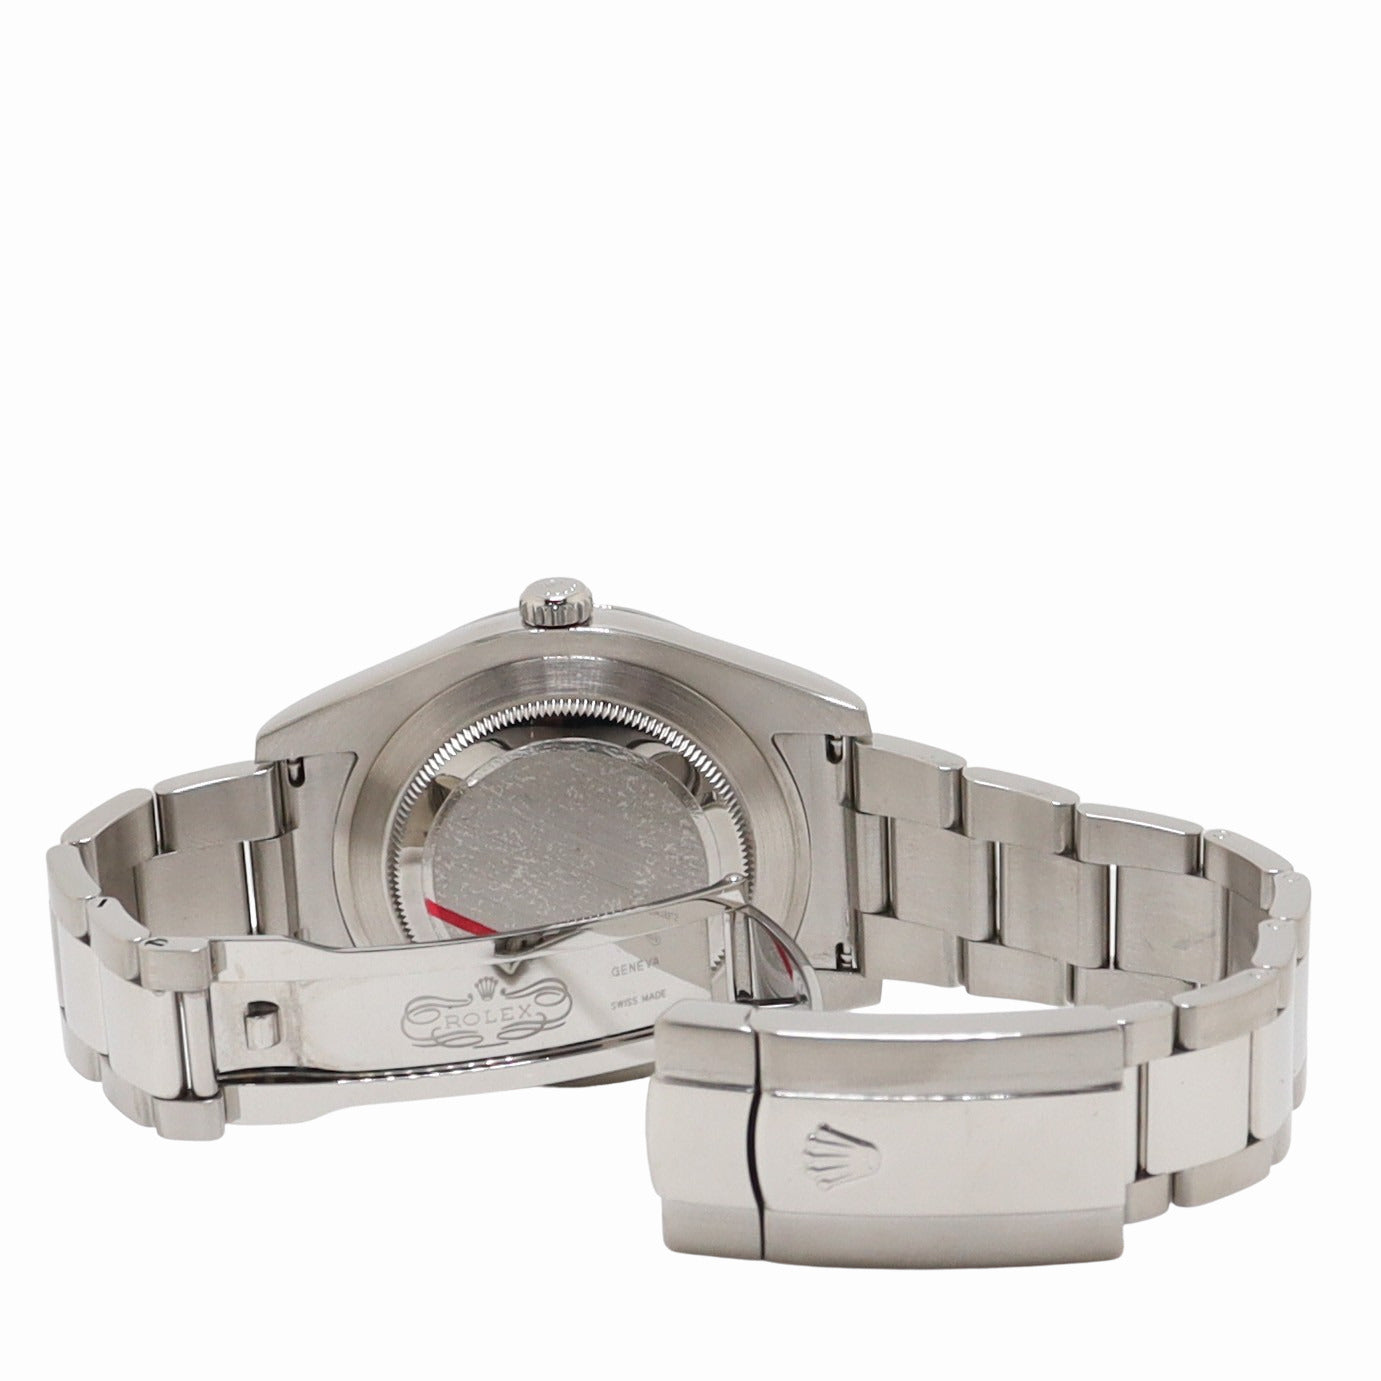 Rolex Datejust 41mm Stainless Steel Blue Roman Dial Watch Reference# 116300 - Happy Jewelers Fine Jewelry Lifetime Warranty